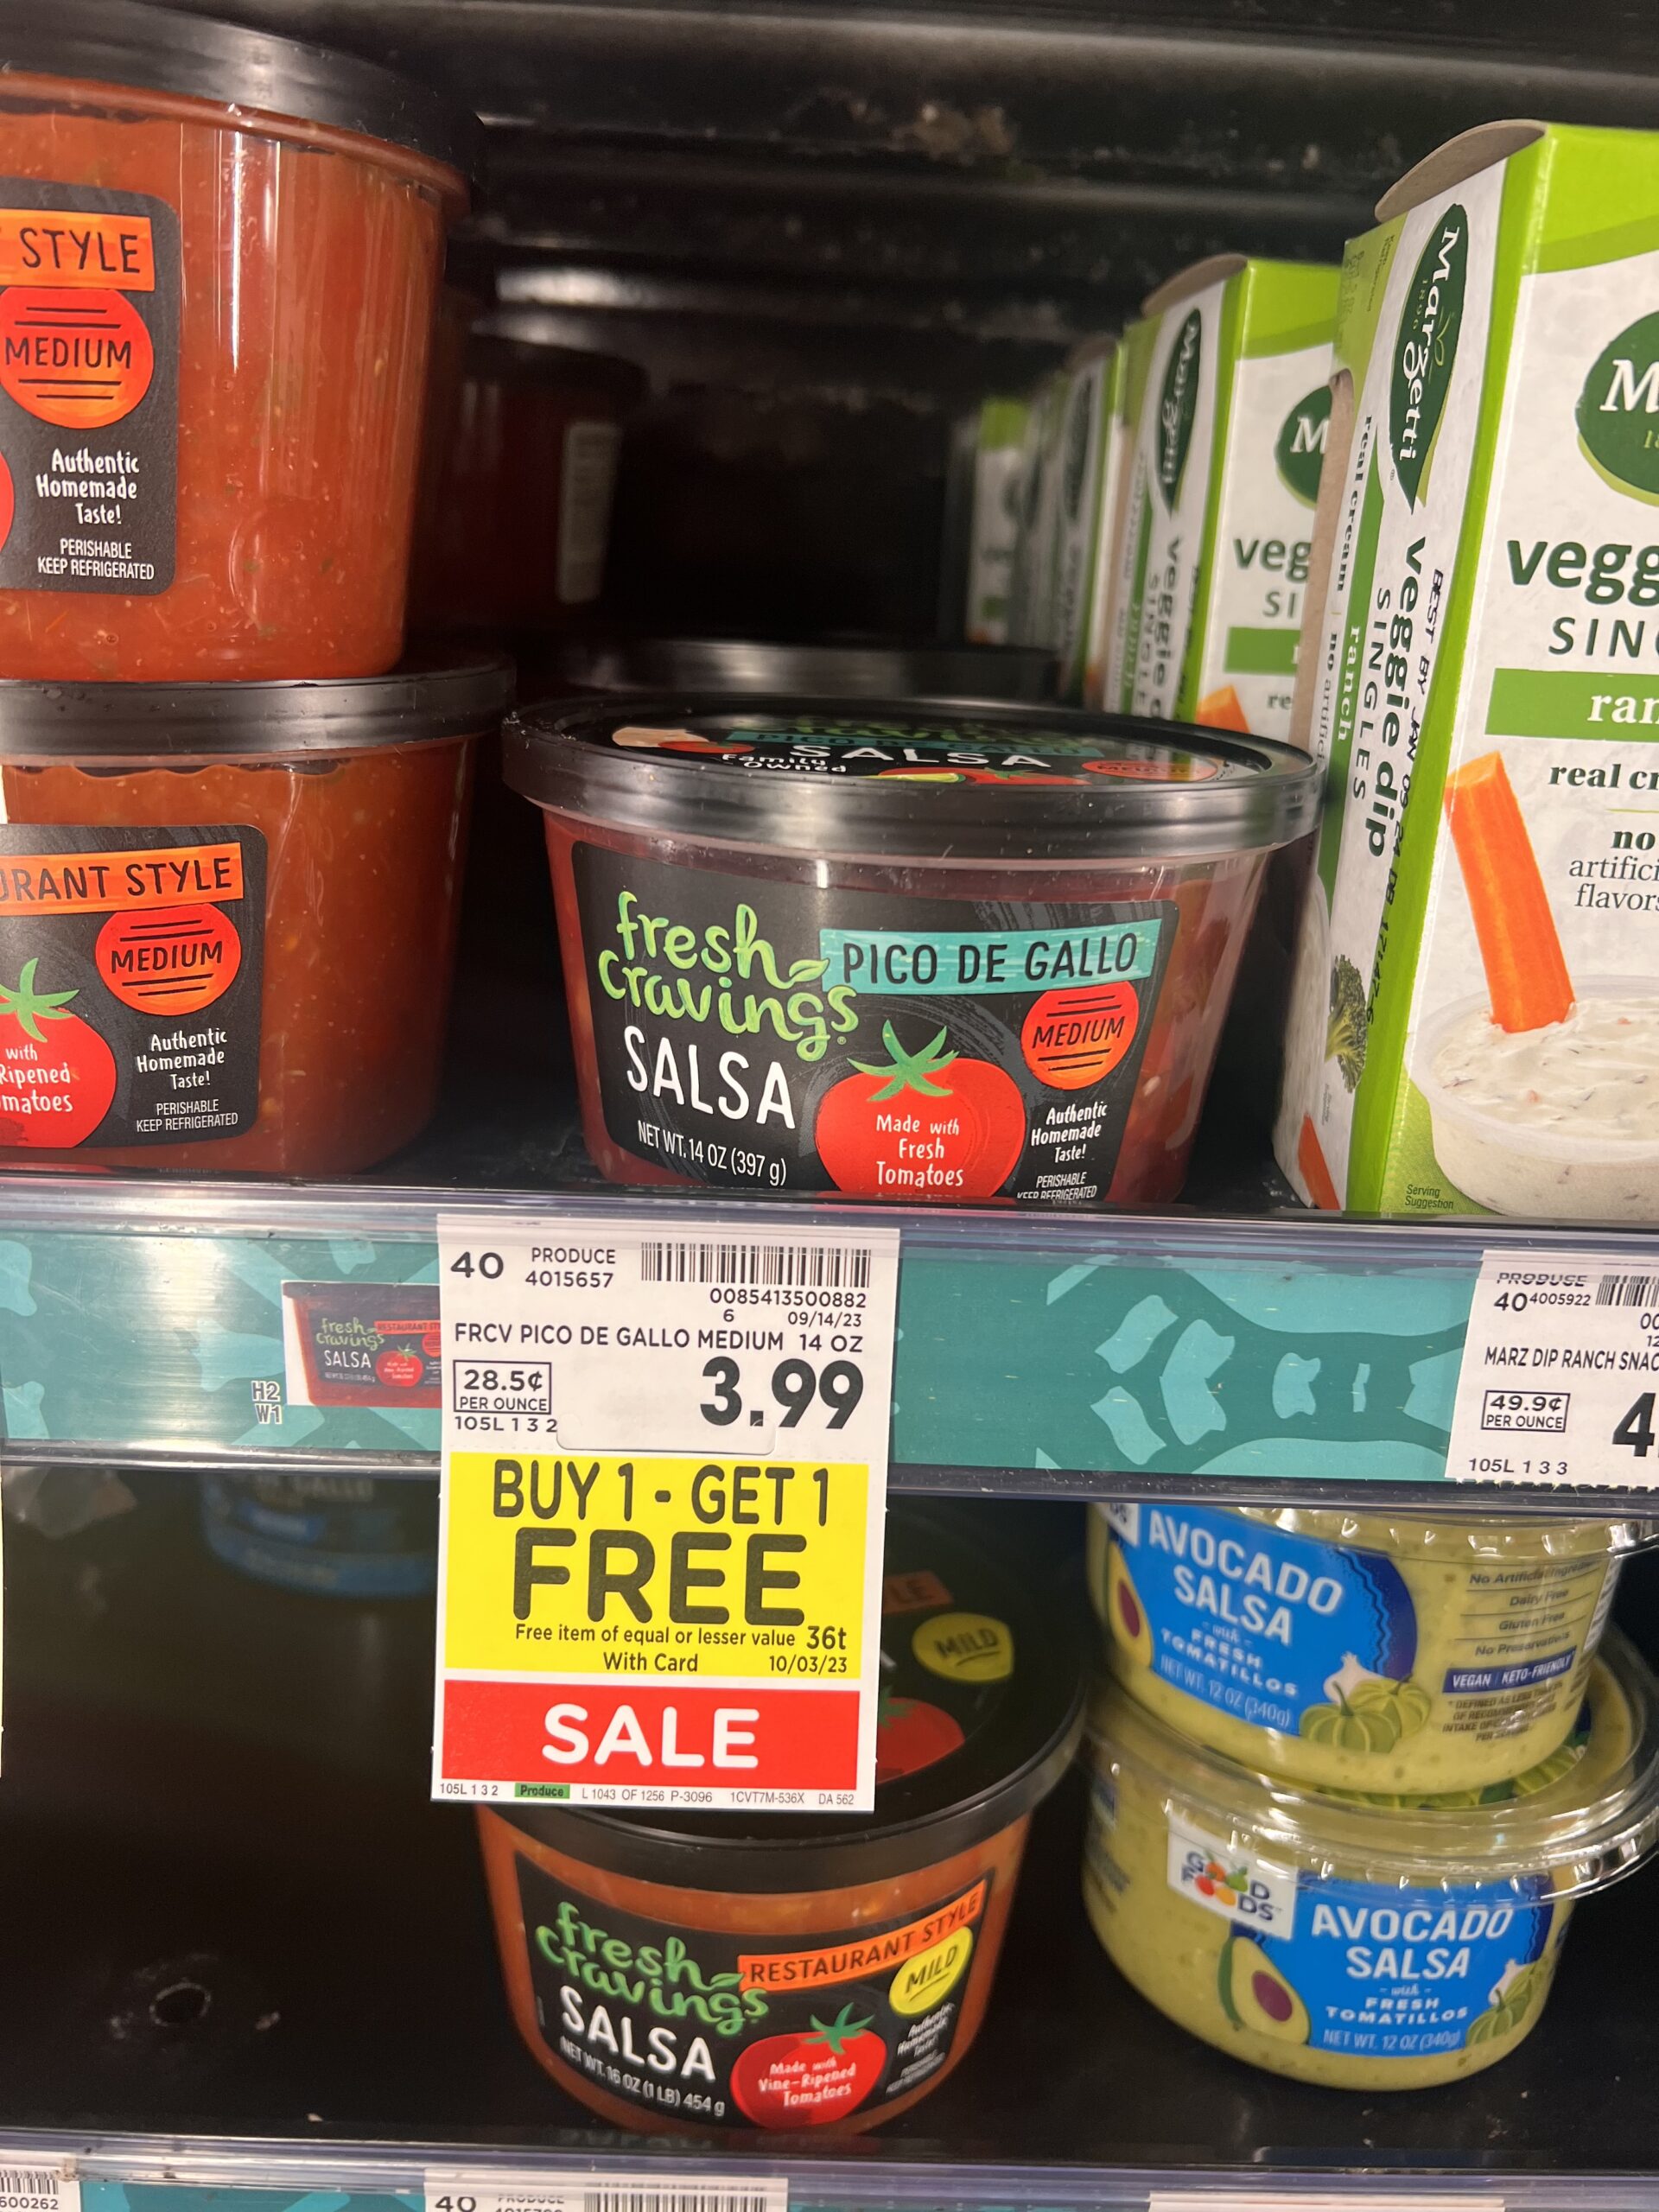 fresh cravings salsa kroger shelf image 1